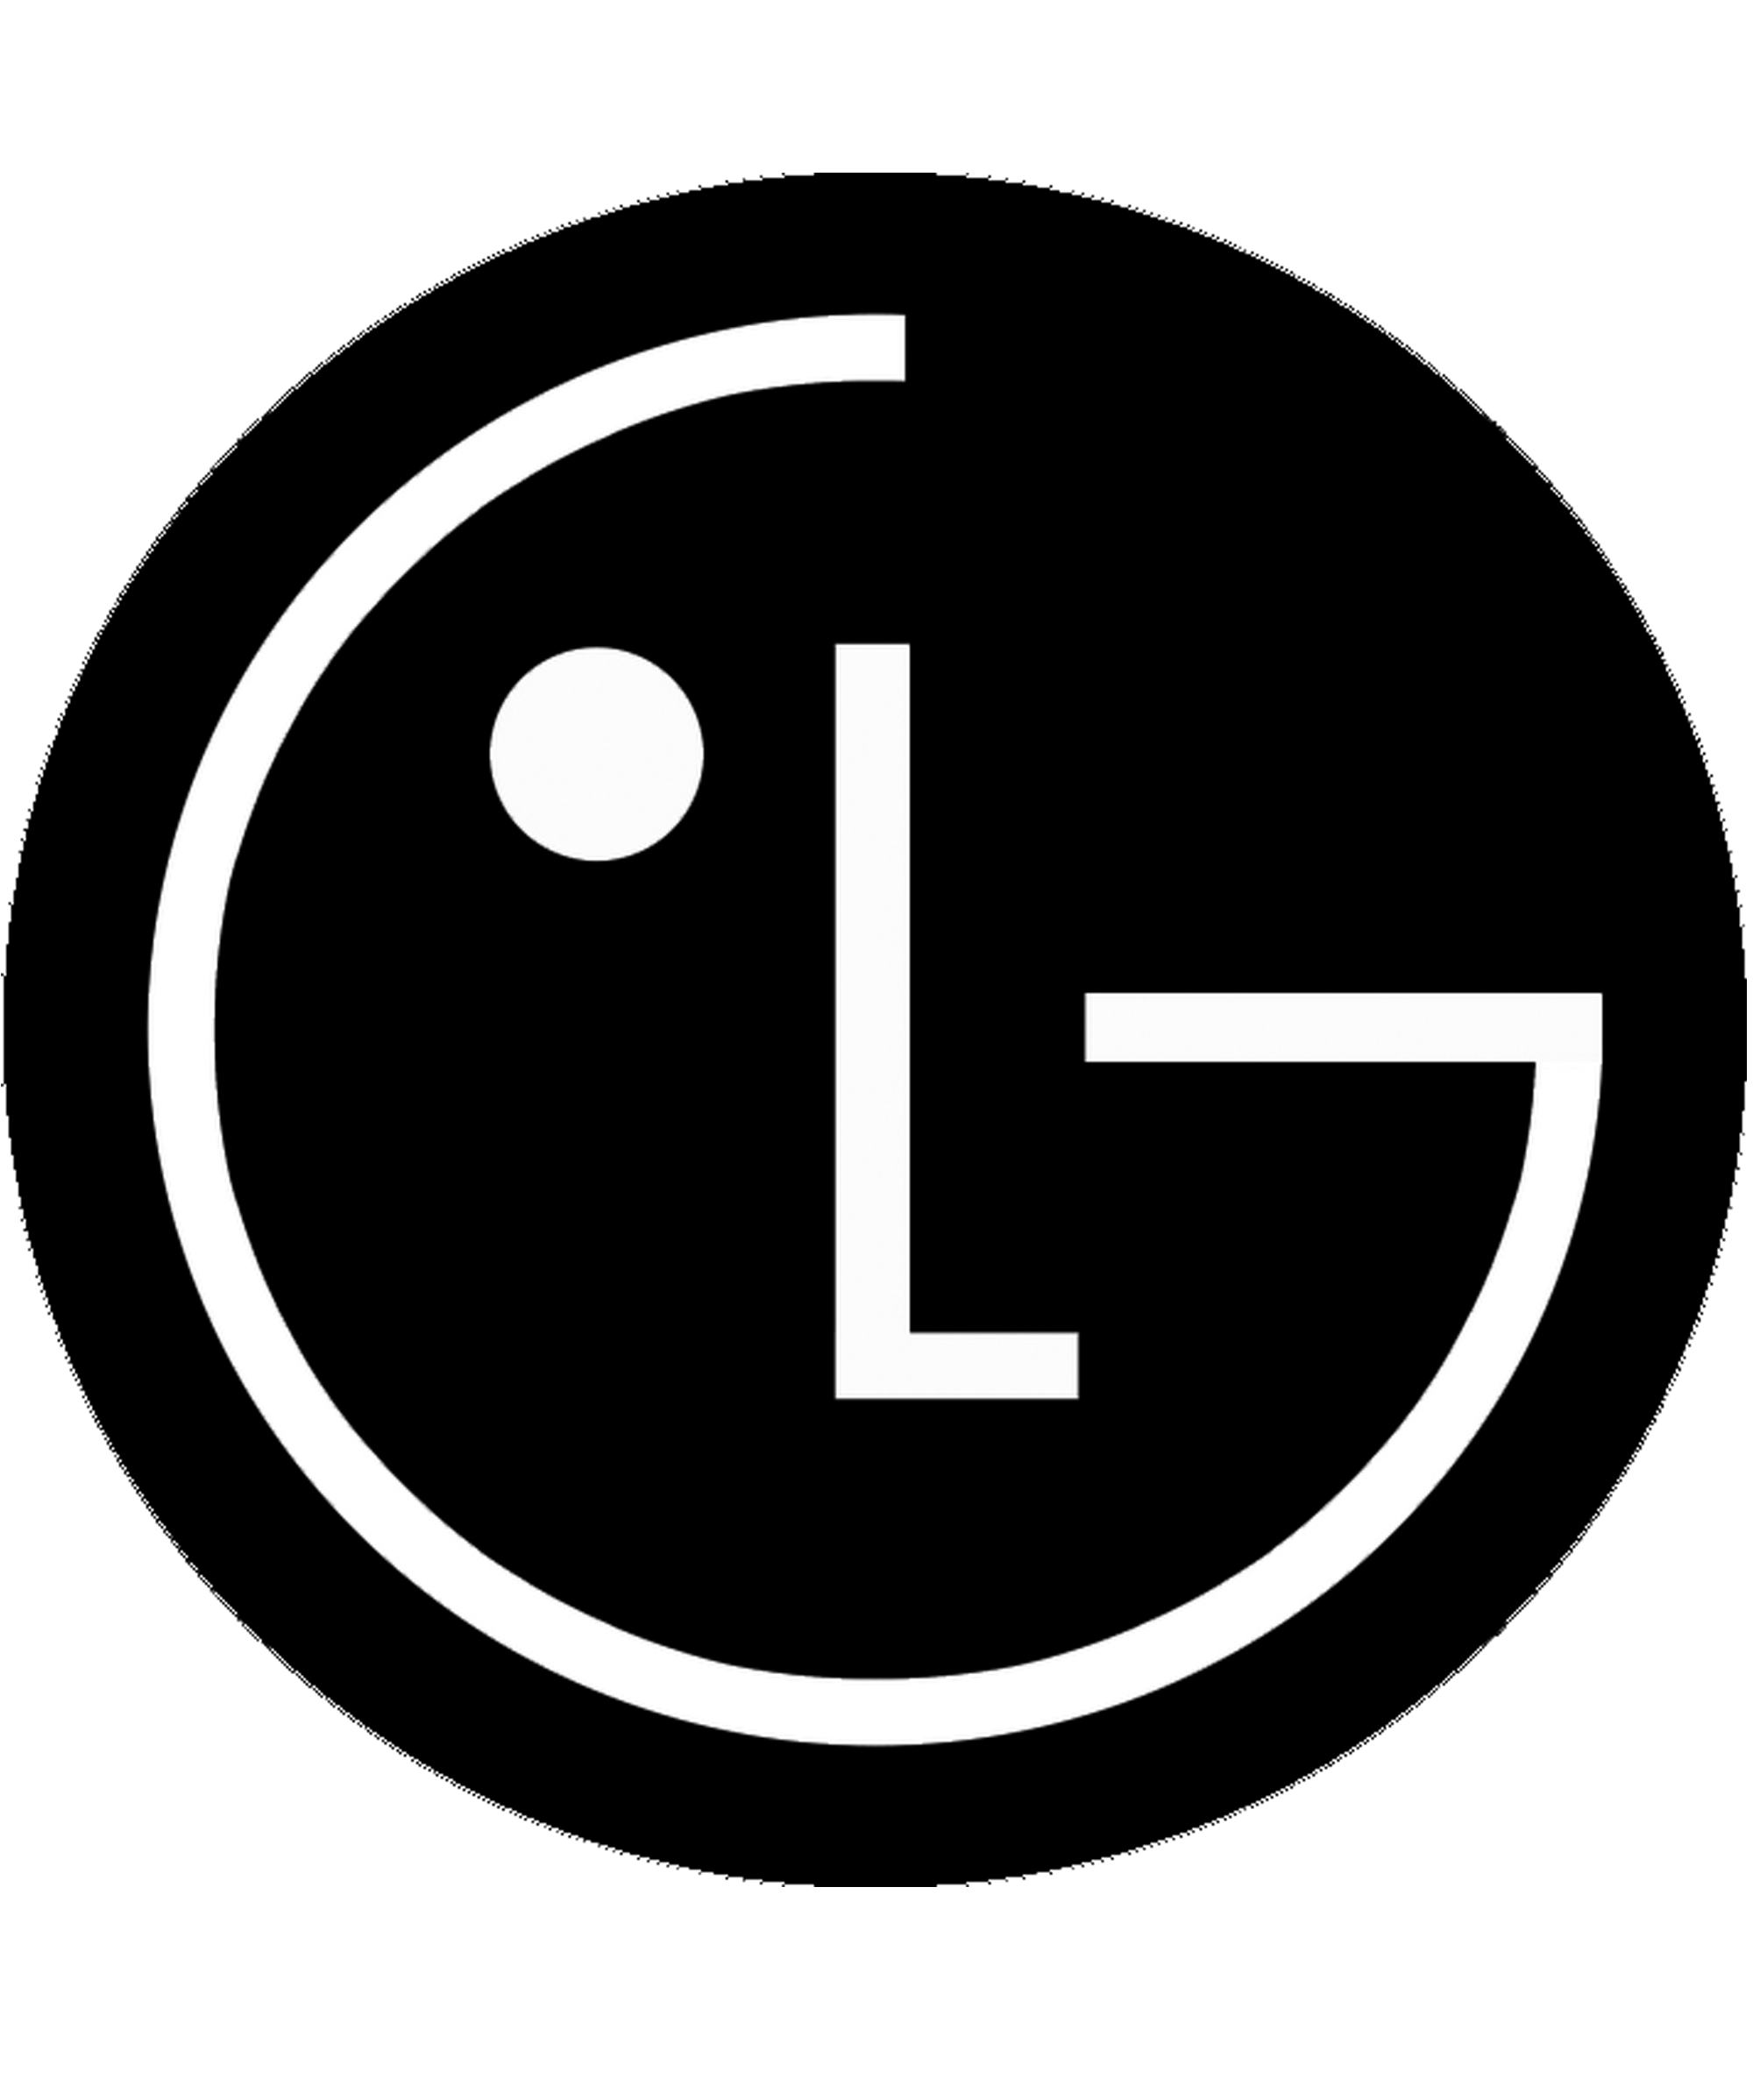 Copy of LG logo 1 (1).png